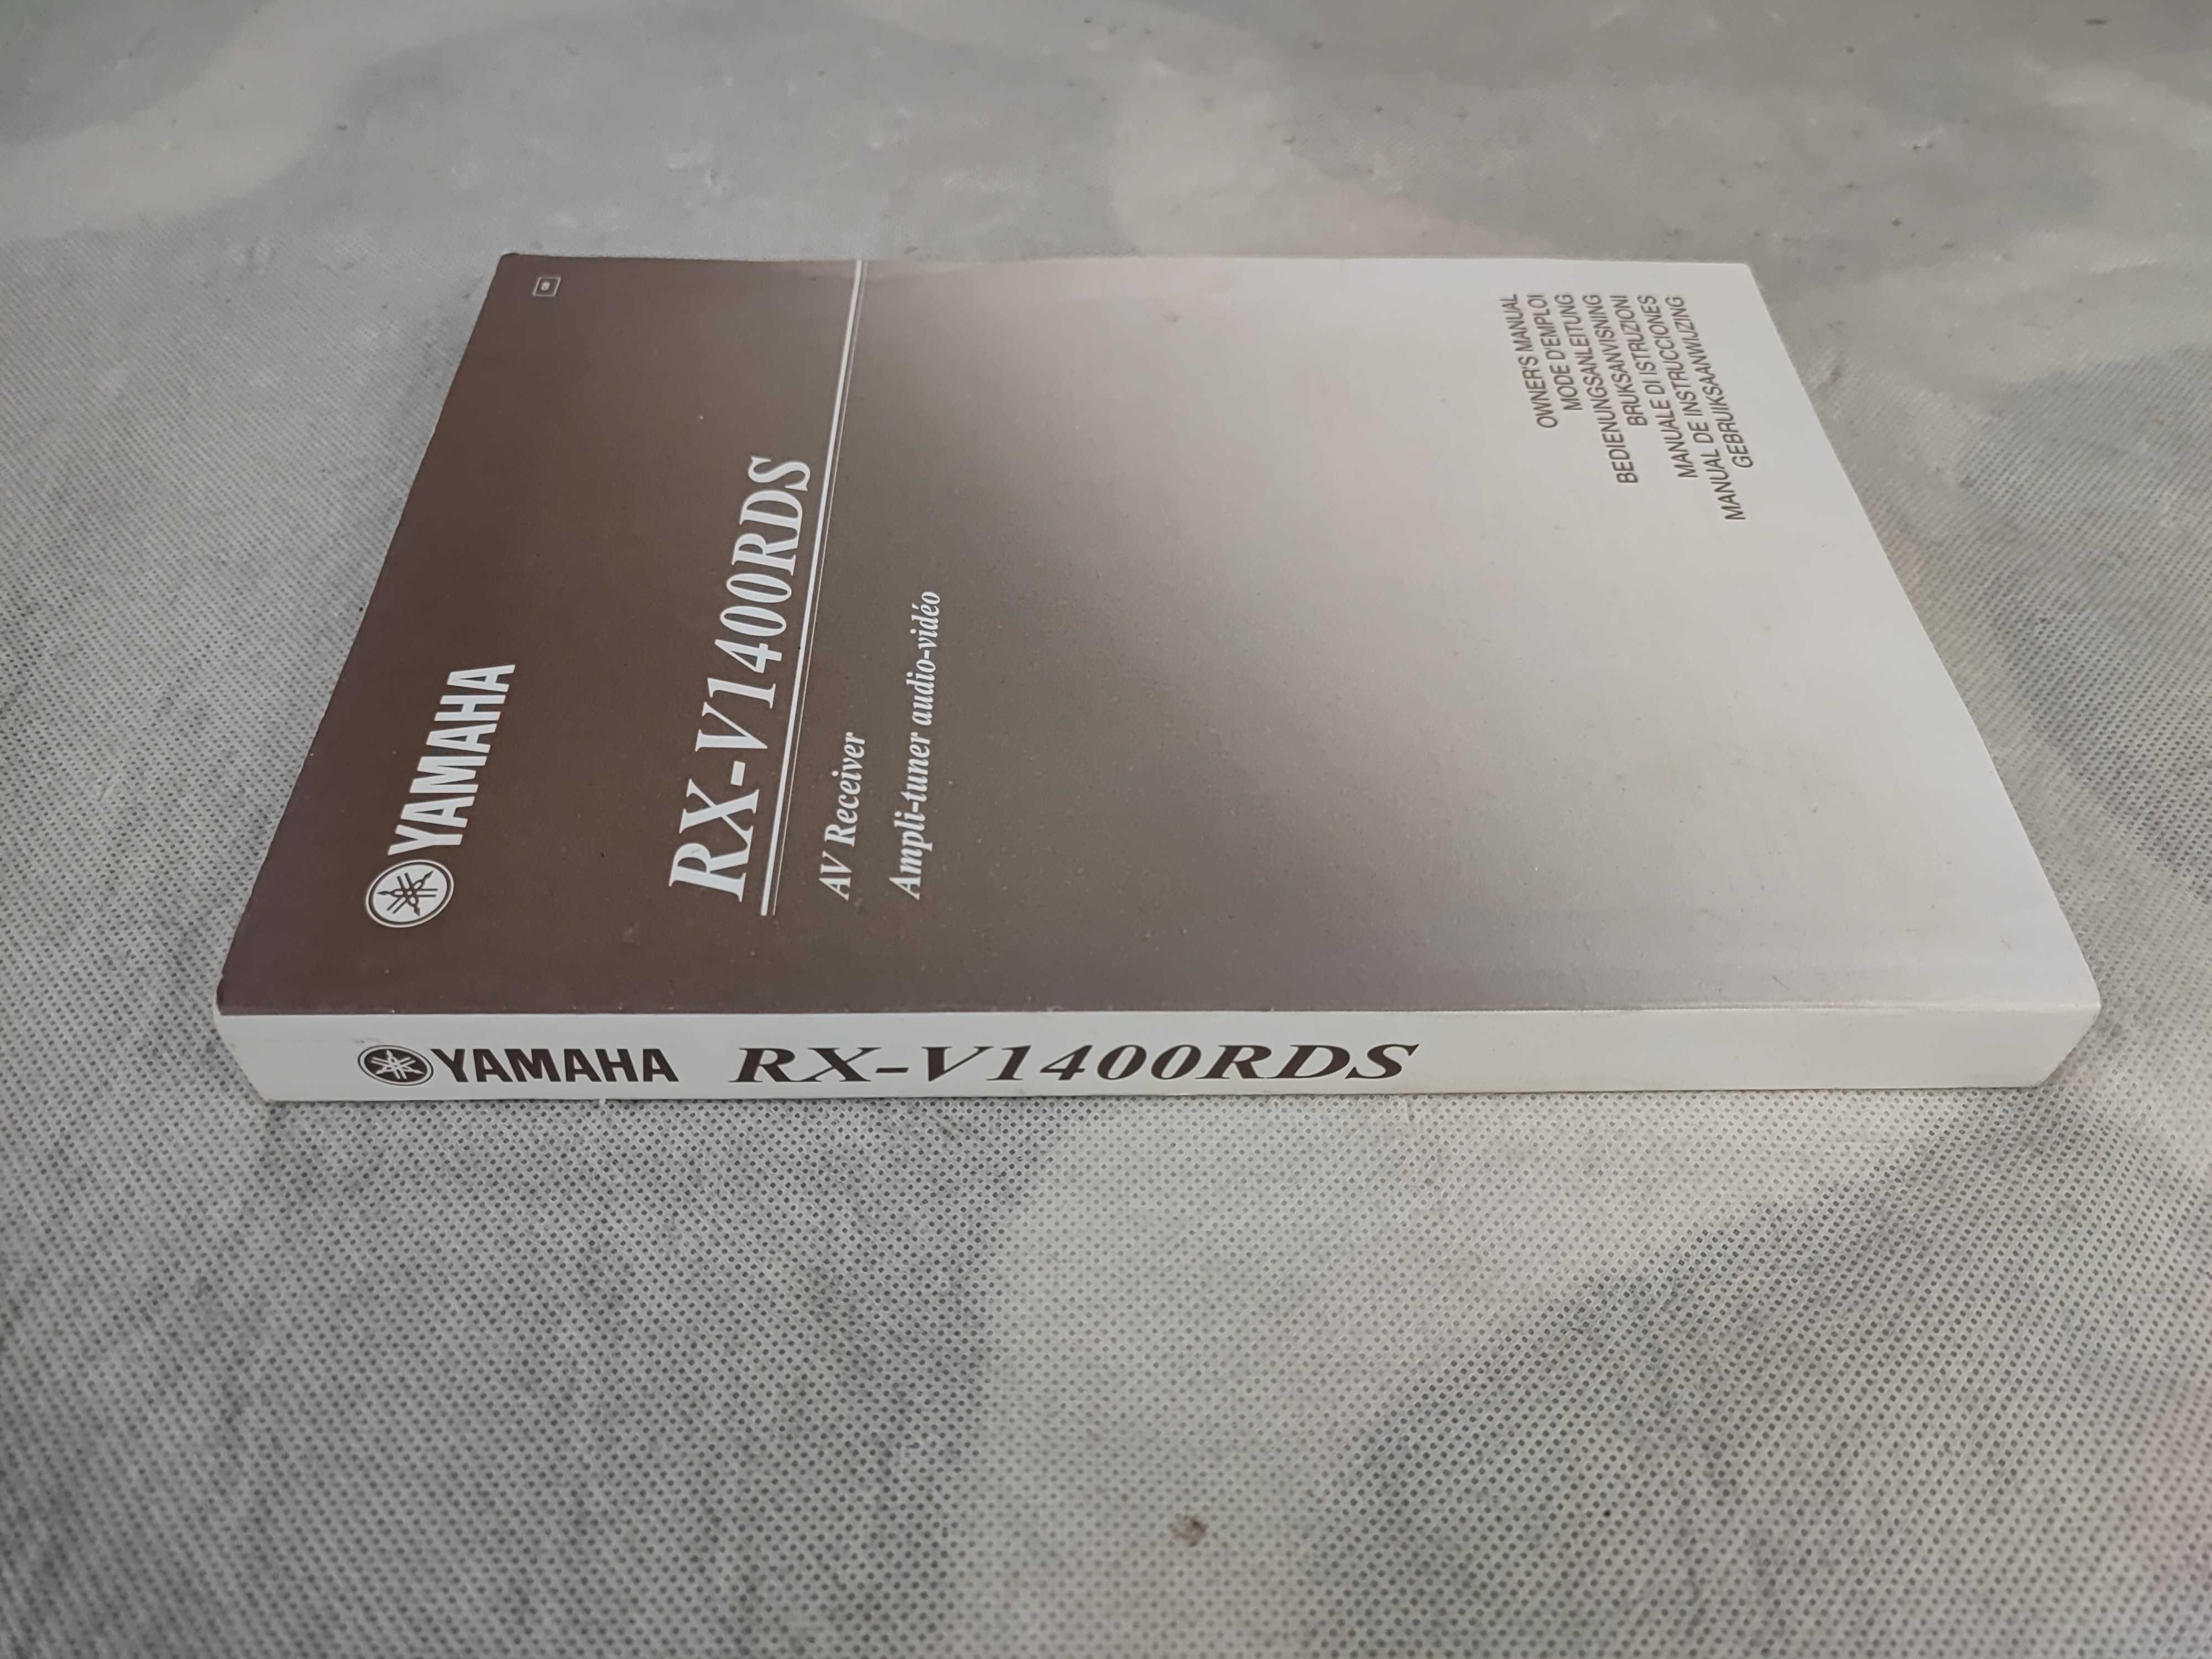 Instrukcja obsługi Yamaha Amplituner RX-V1400RDS Warszawa